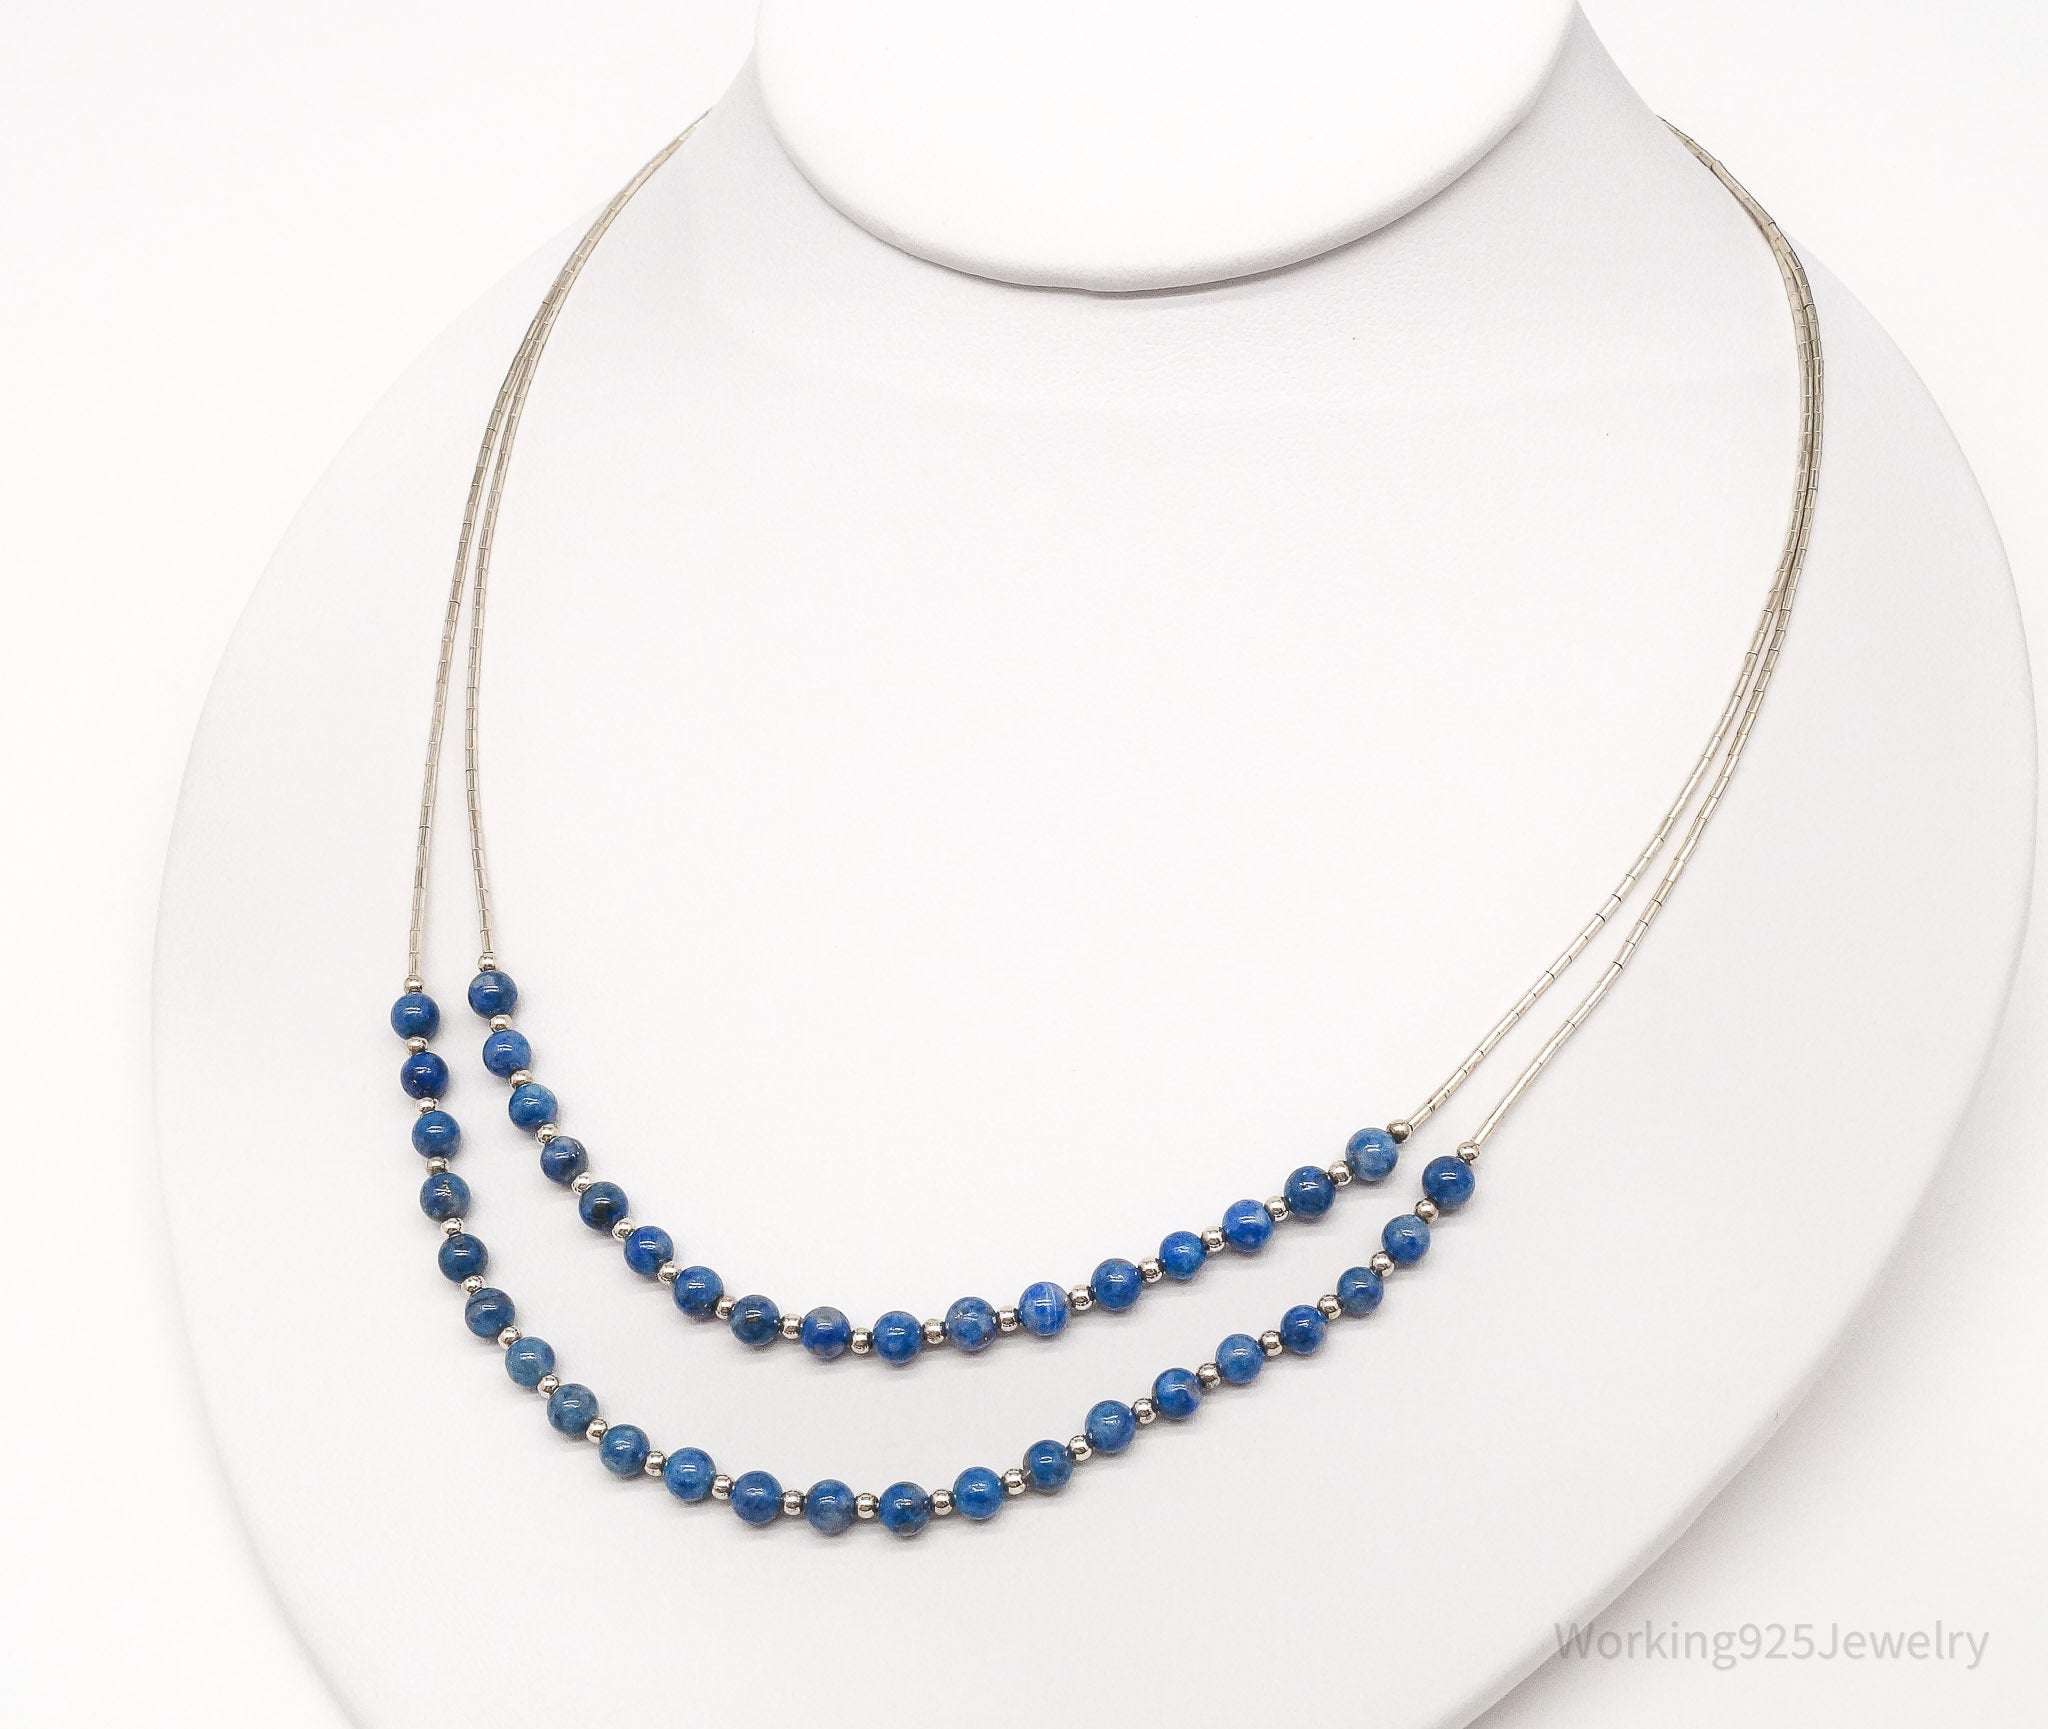 Vintage Southwest Carolyn Pollack Lapis Lazuli Bead Sterling Silver Necklace 23"